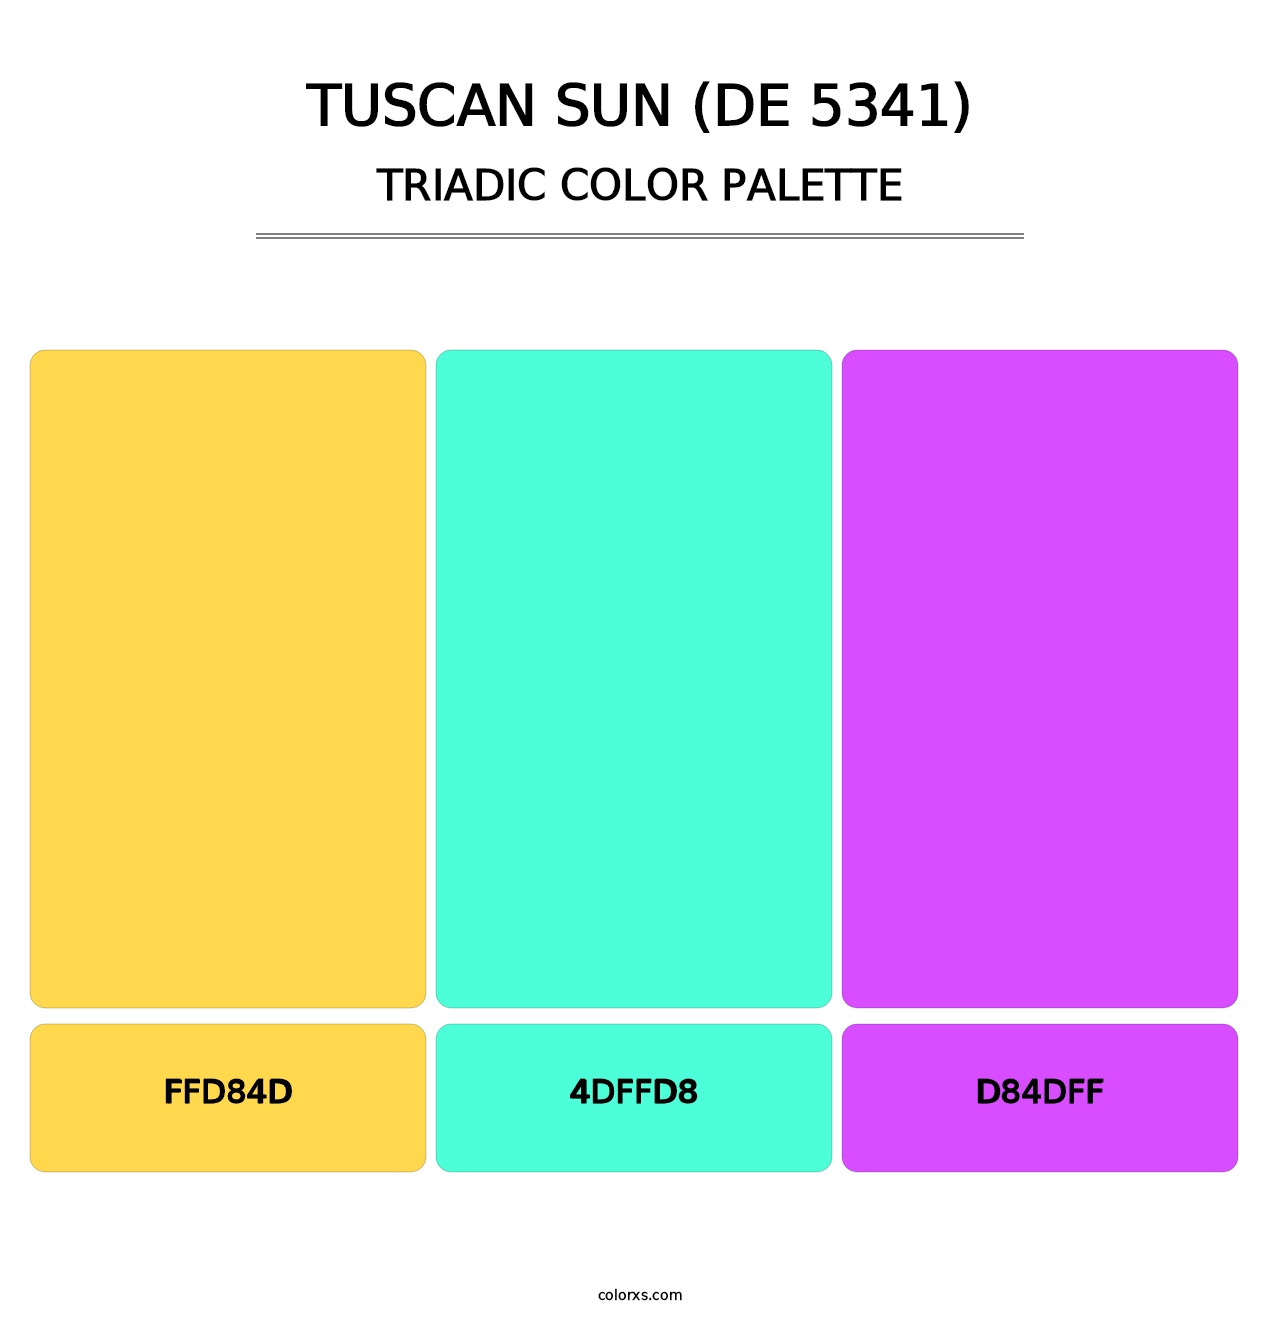 Tuscan Sun (DE 5341) - Triadic Color Palette